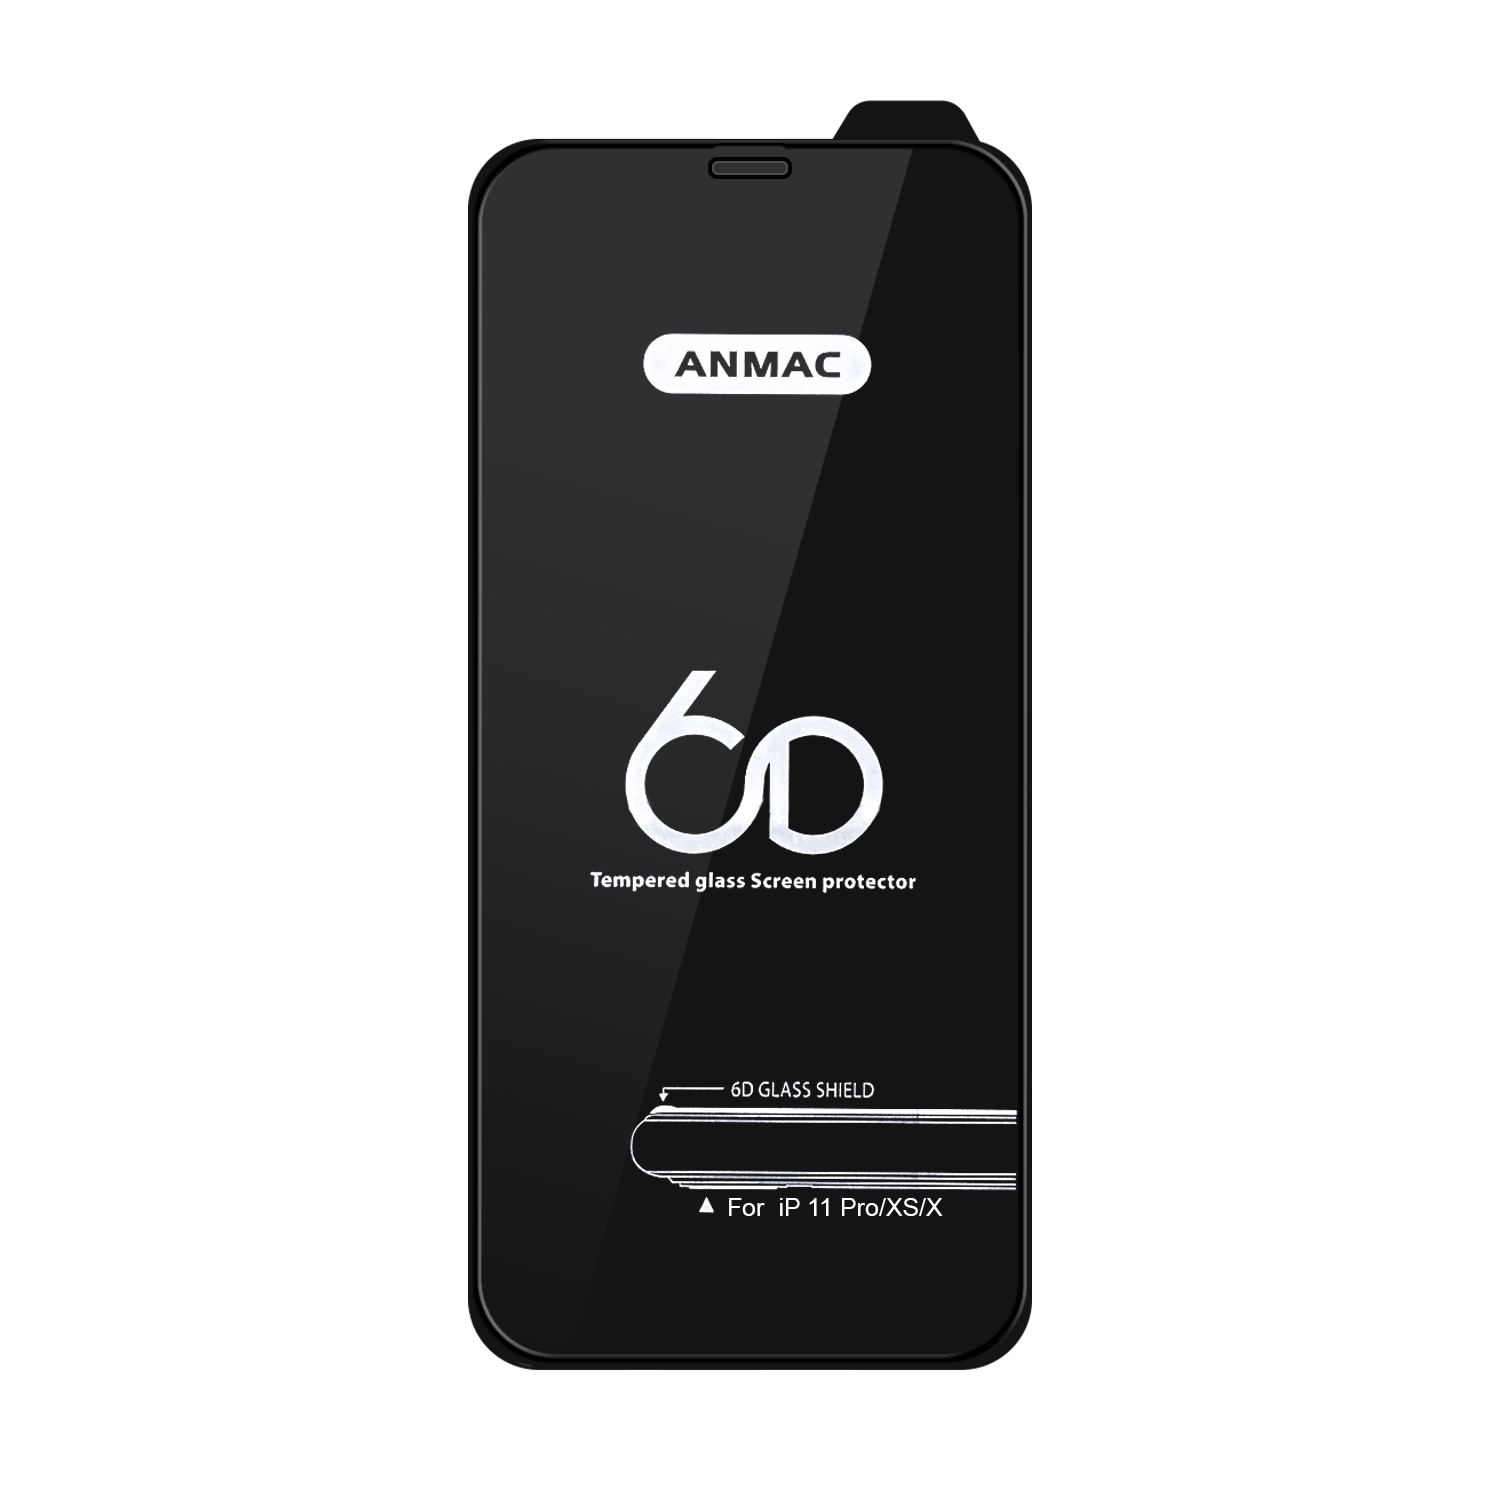 Защитное стекло iPh 11 Pro/XS/X Anmac 6D Black без упаковки Арт.1137155